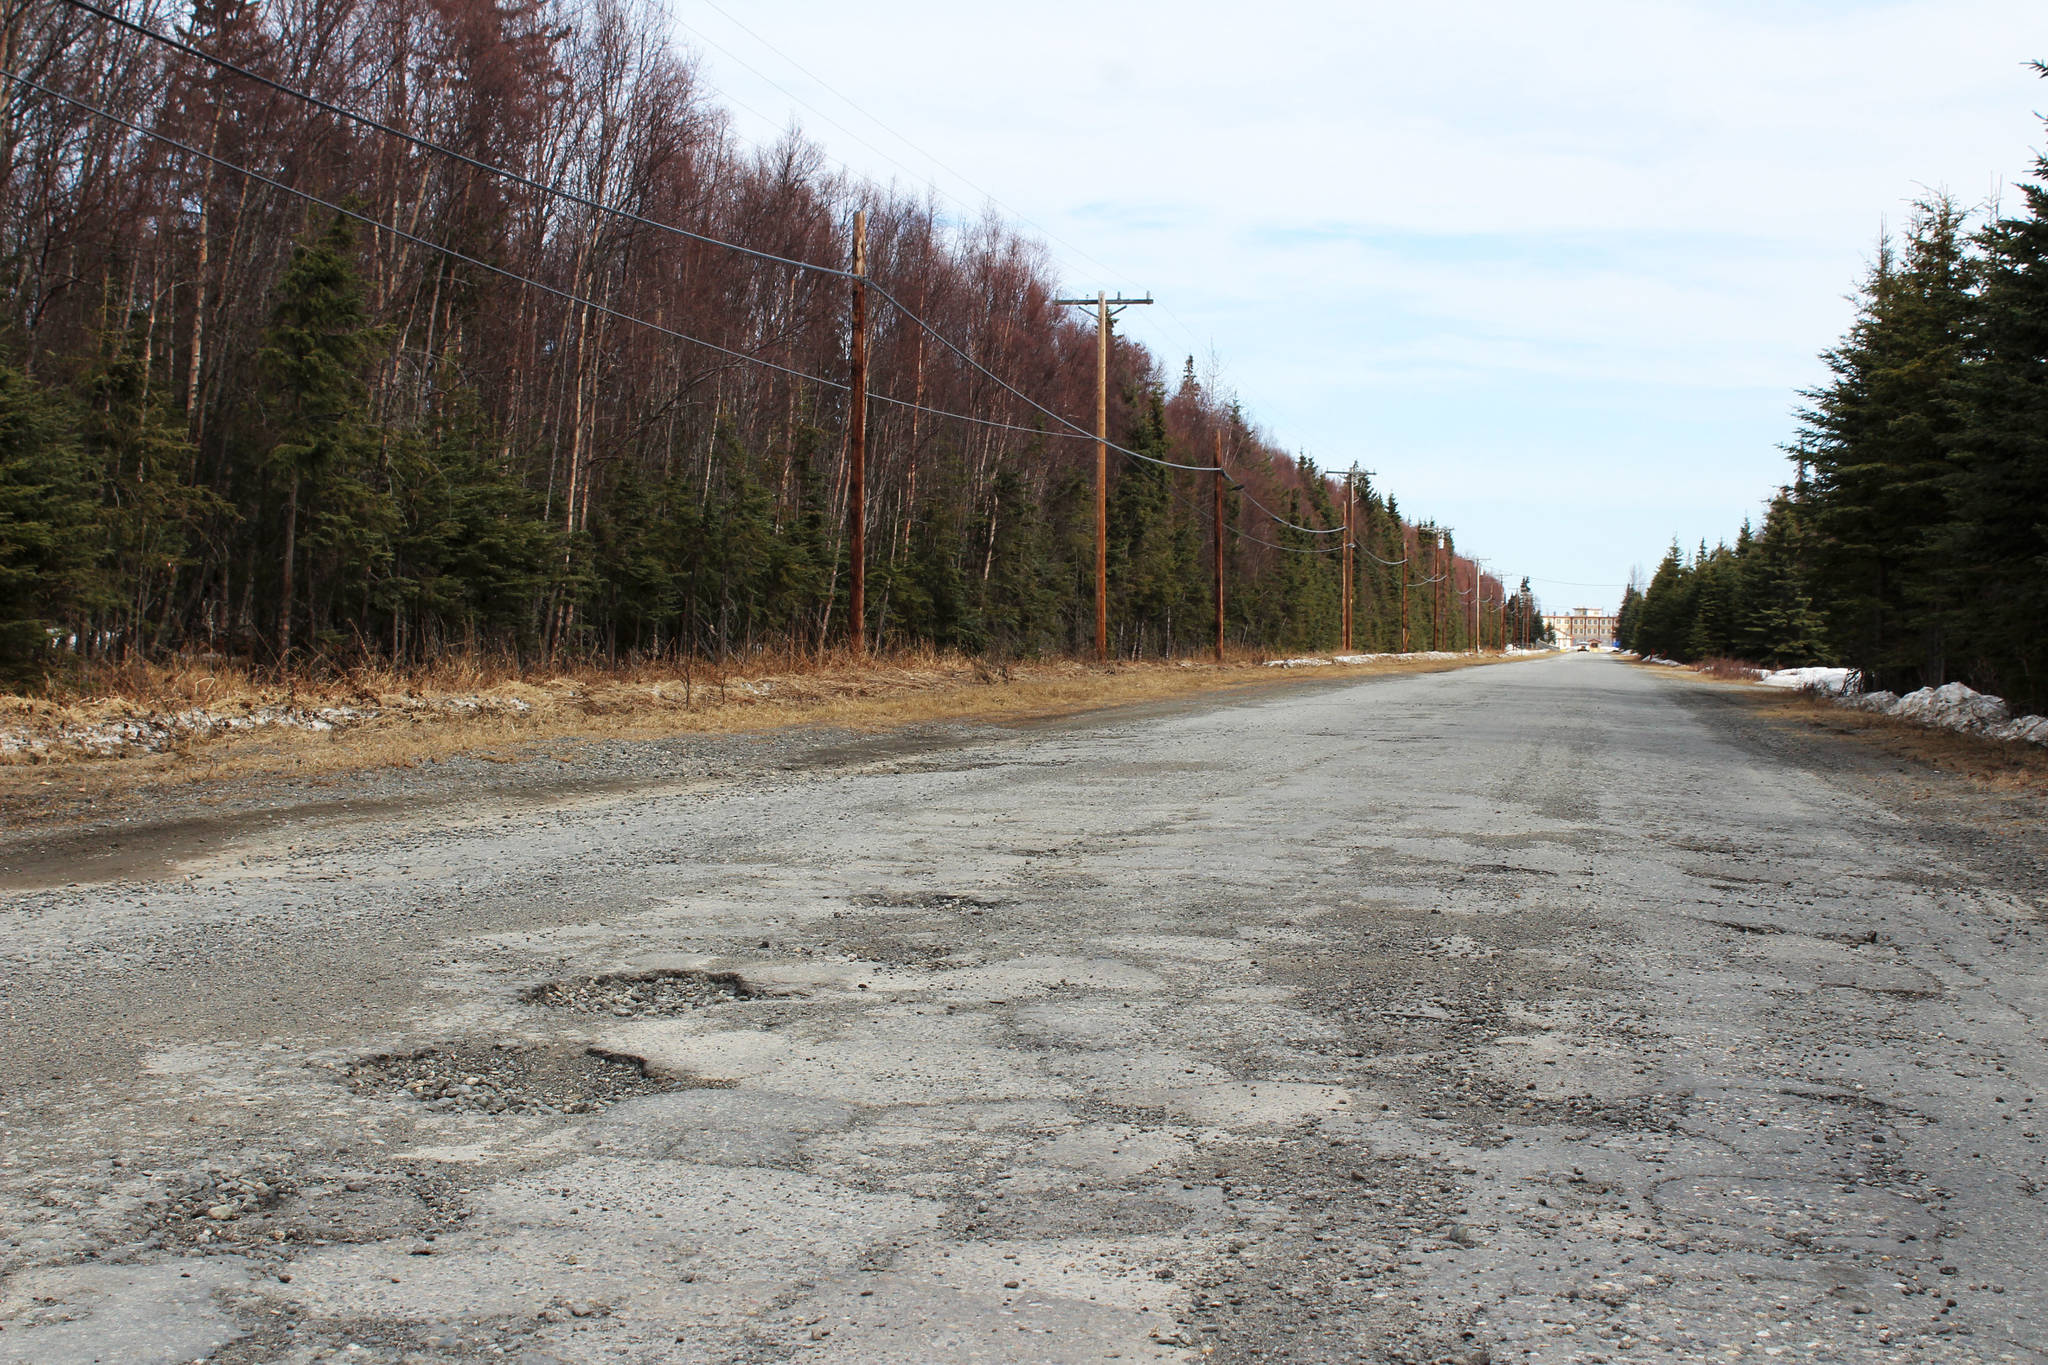 Potholes are seen on Wildwood Drive on Thursday, April 22 in Kenai, Alaska. (Ashlyn O’Hara/Peninsula Clarion)